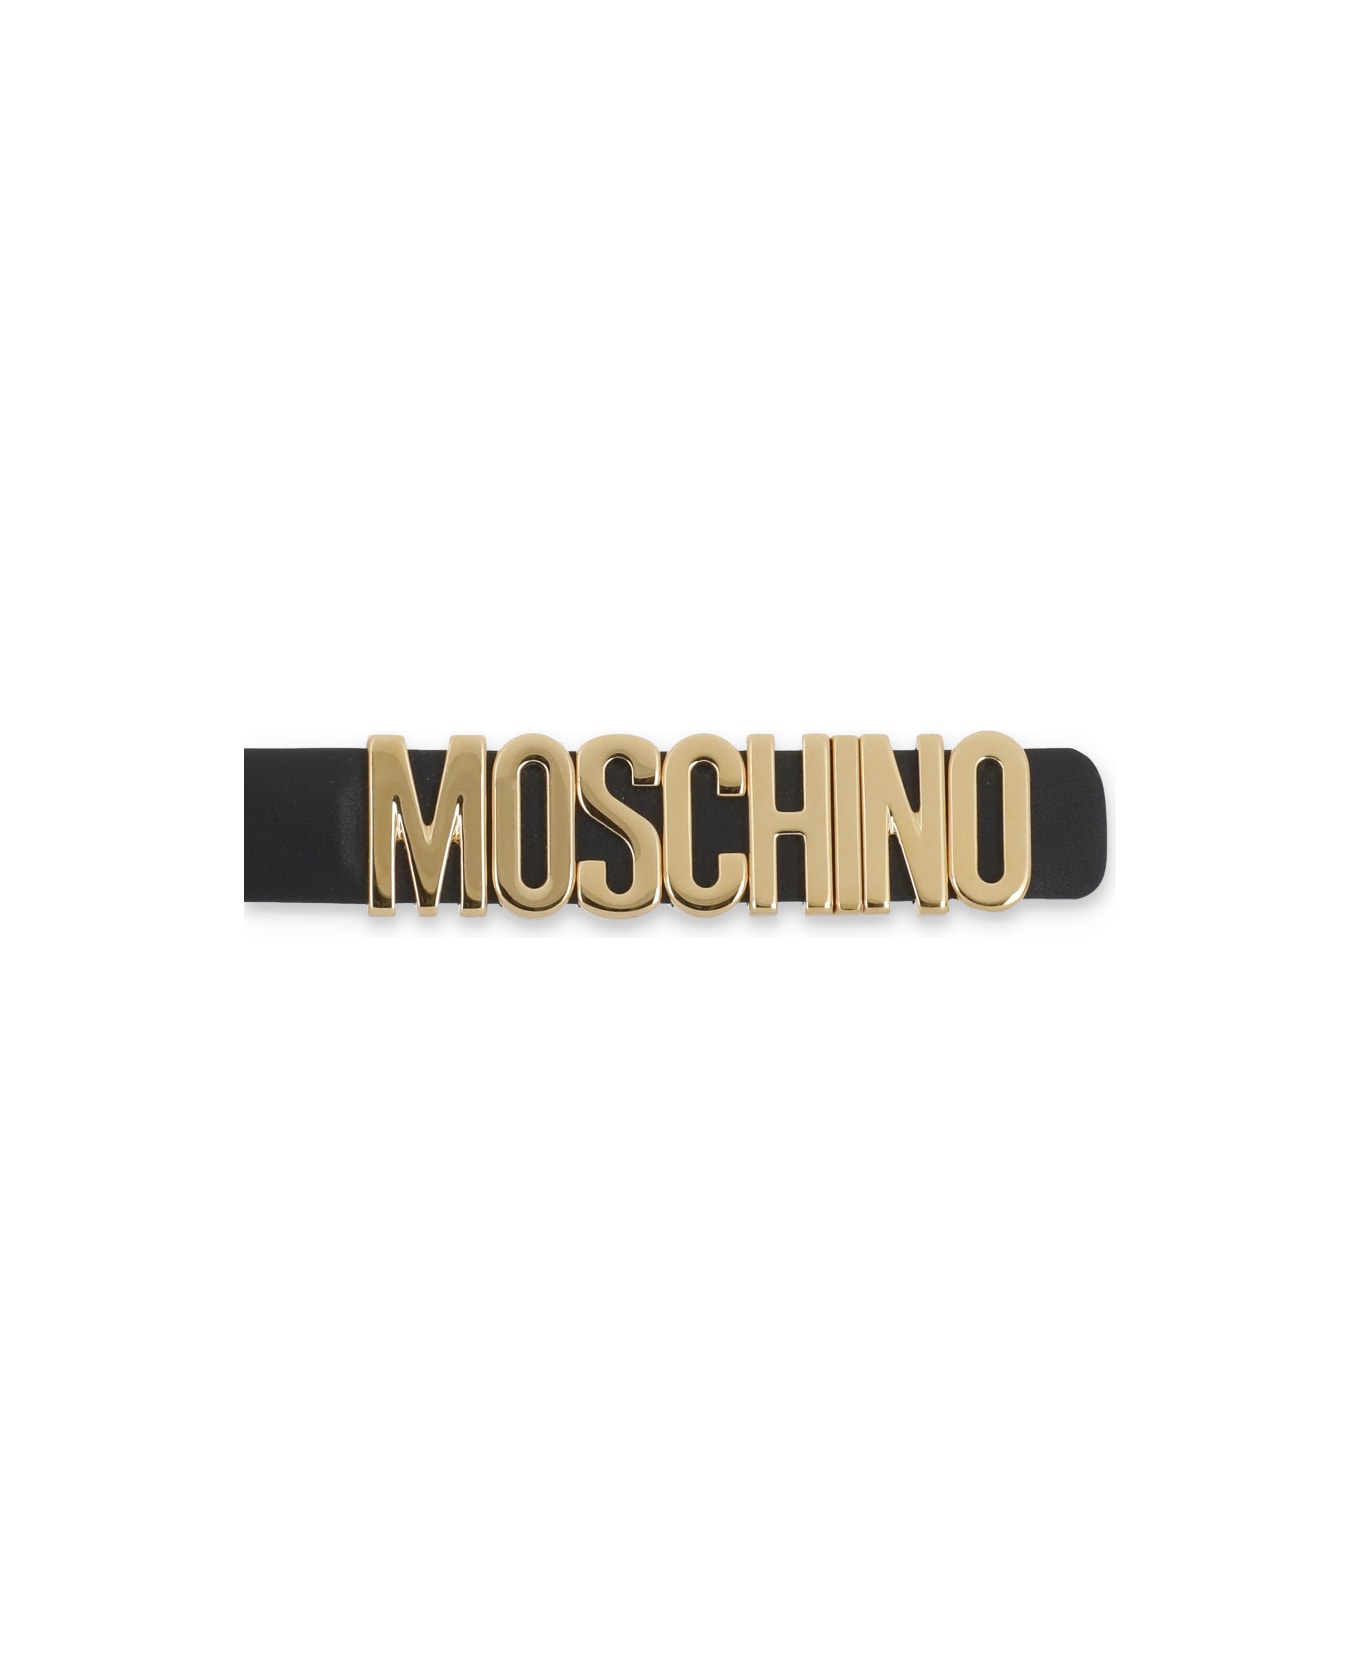 Moschino Leather Belt - Black ベルト